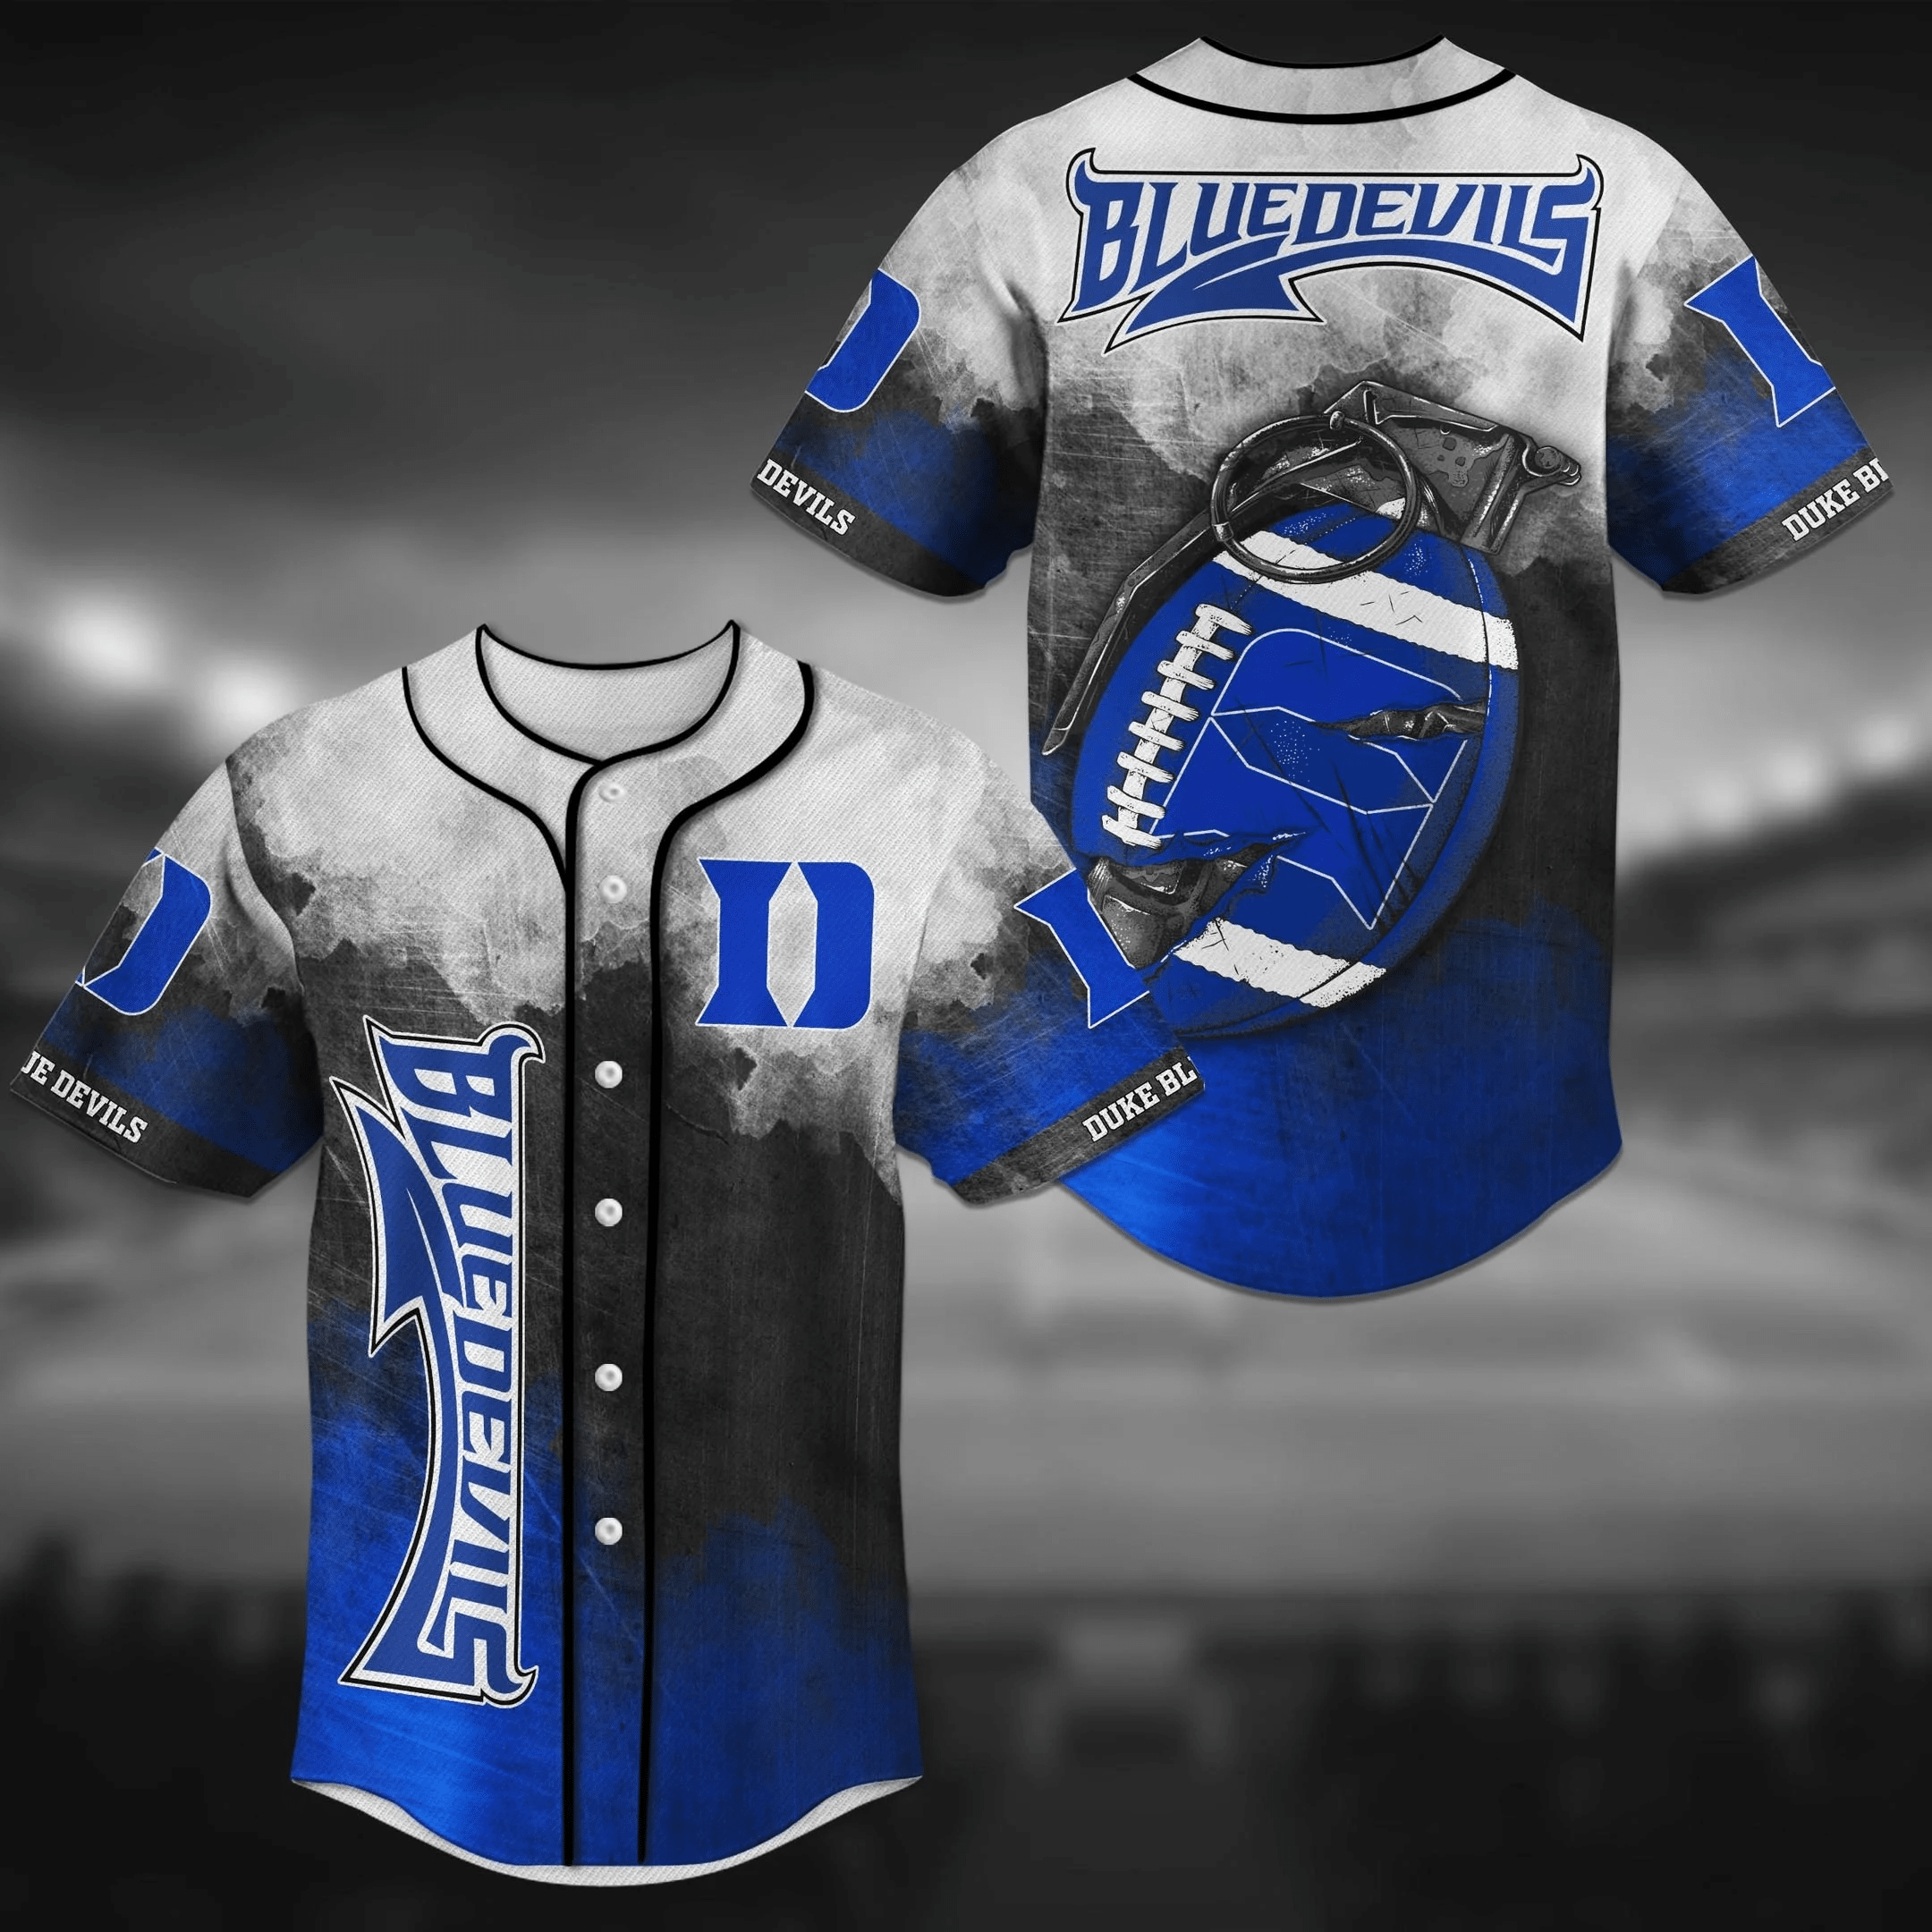 Duke Blue Devils NCAA Baseball Jersey Shirt Grenade FVJ